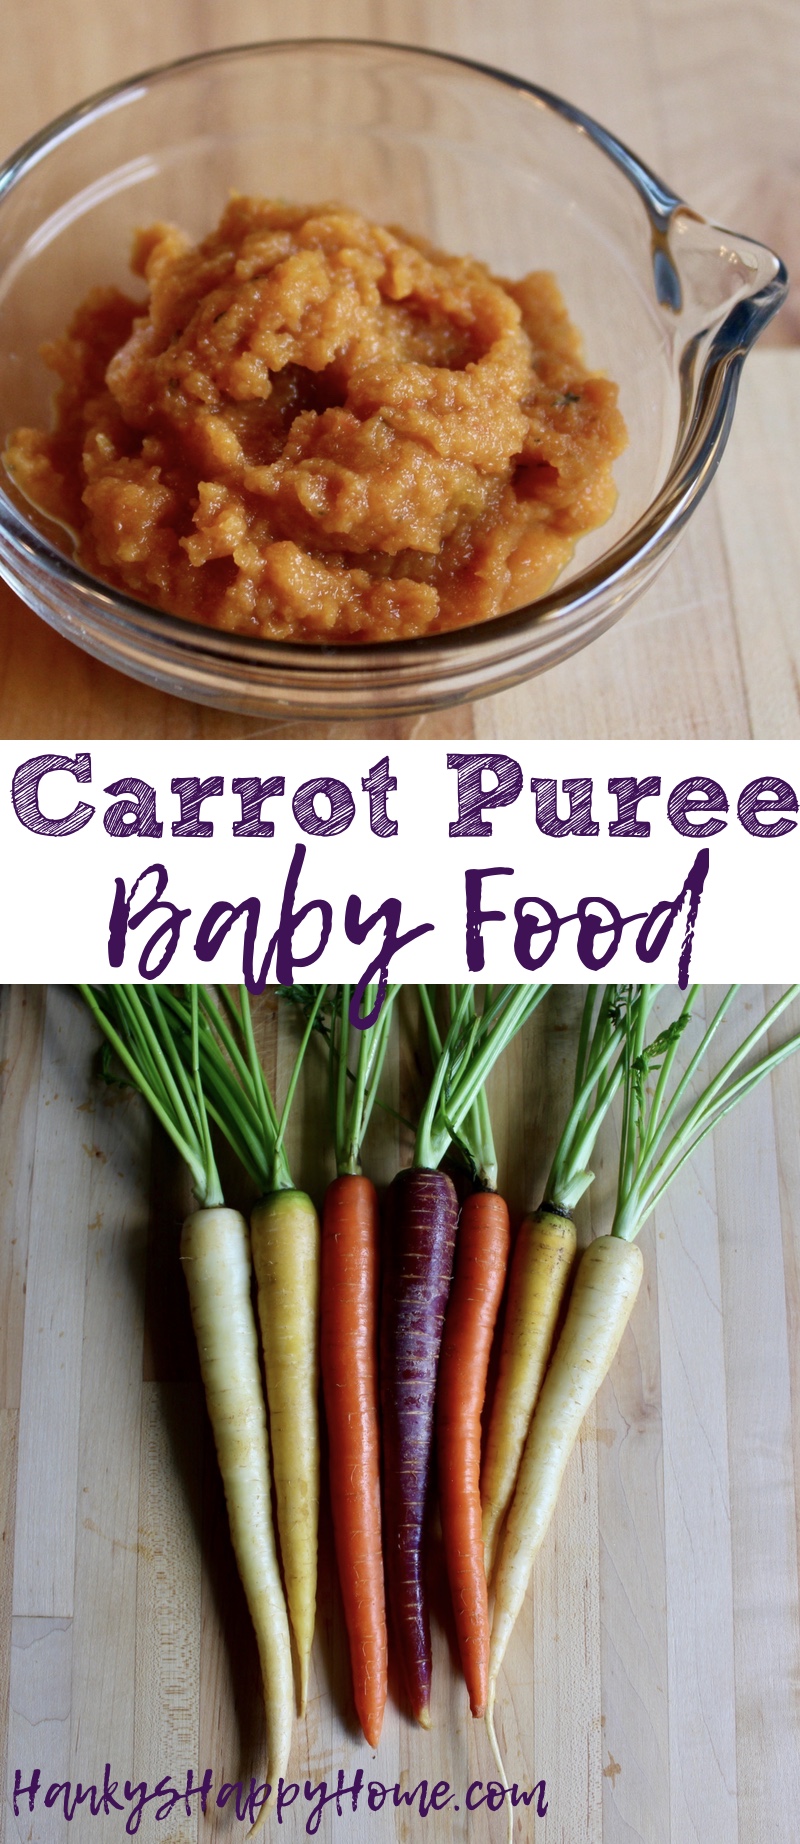 Try some carrot puree - Minnesota Parent